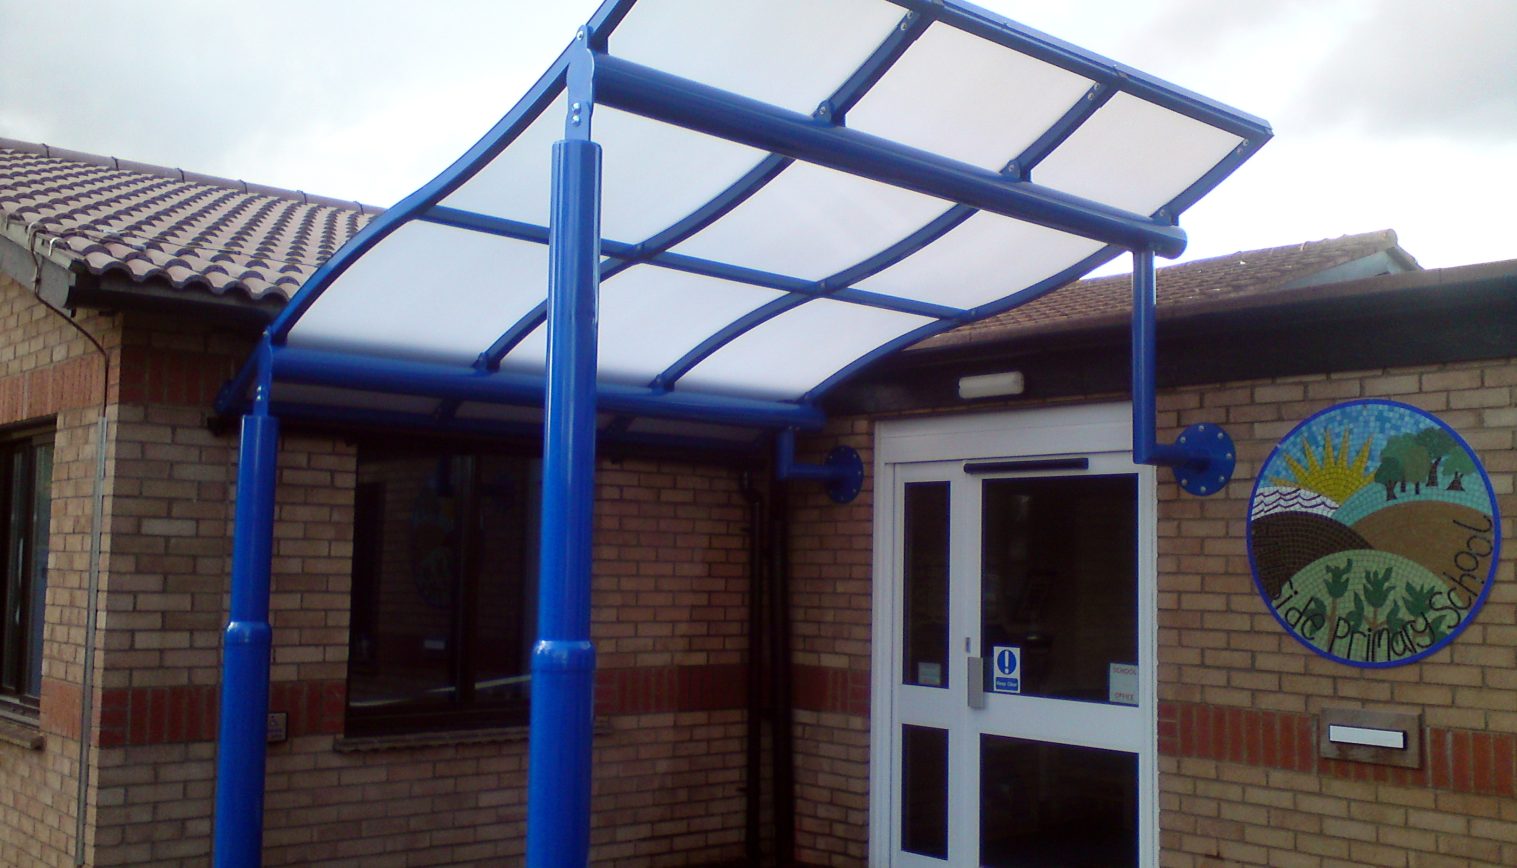 Hillside Primary School – Entrance Canopy